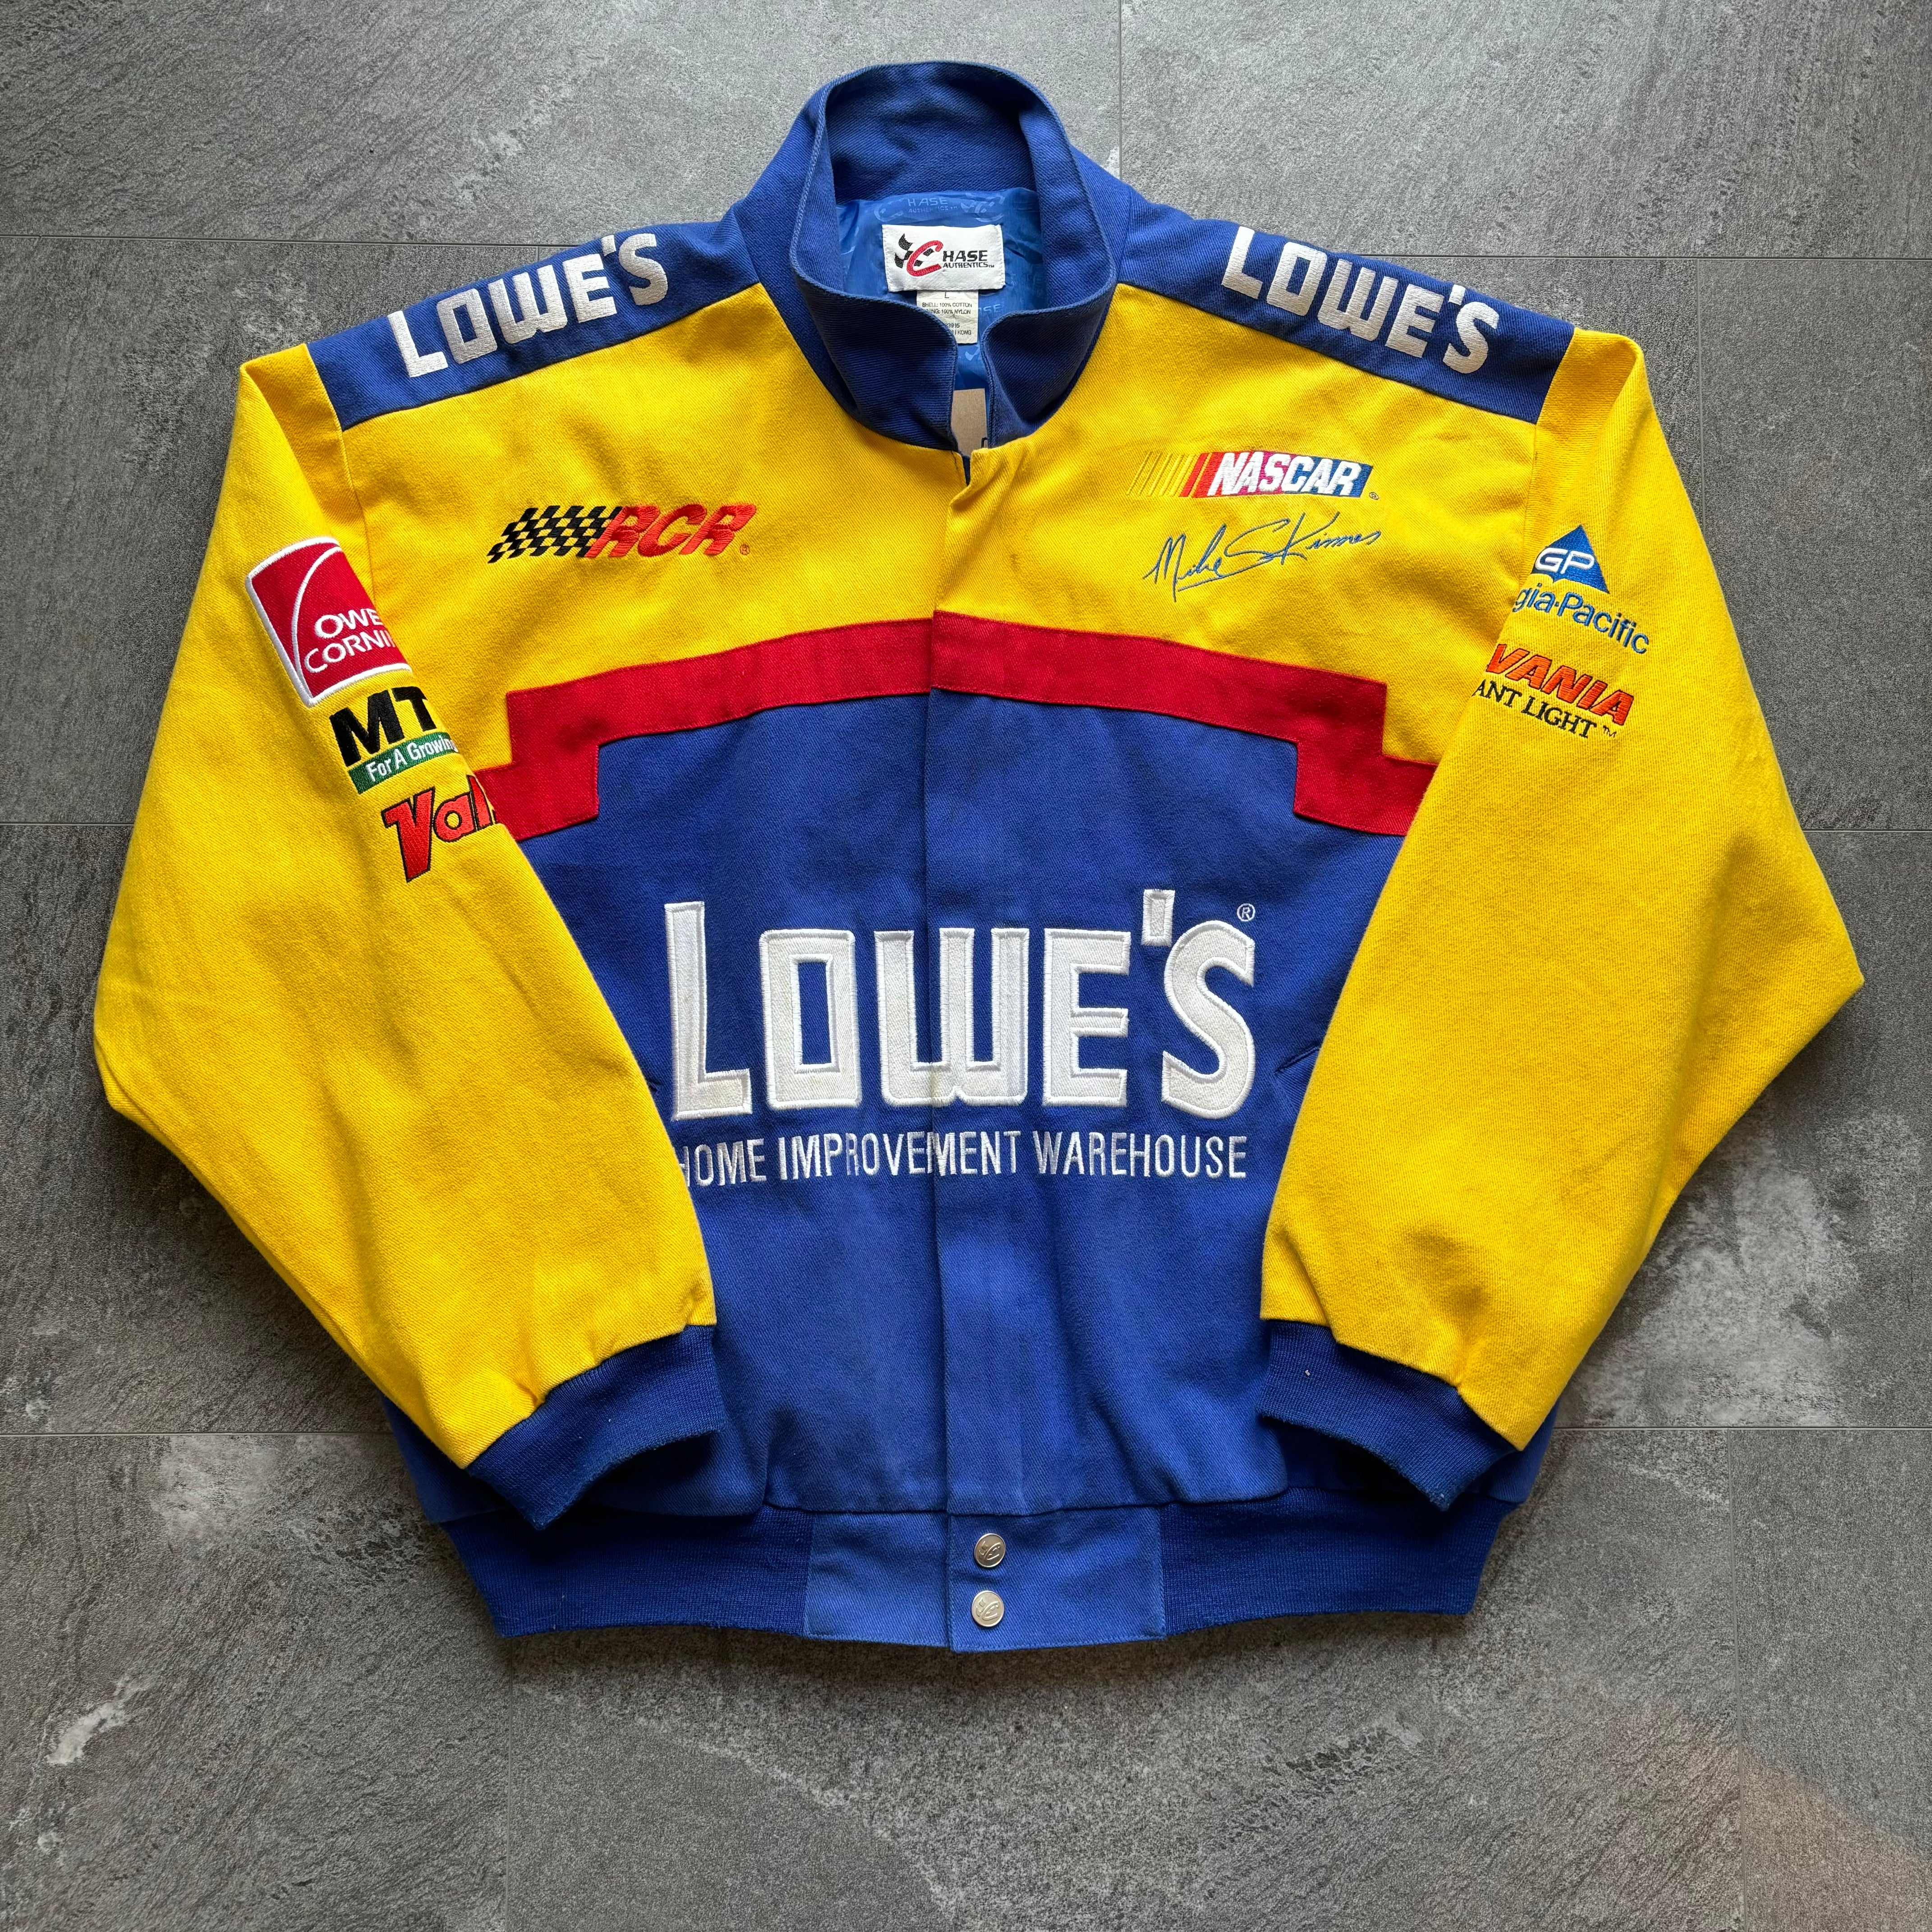 Lowes Home Improvement Nascar Racing jacket